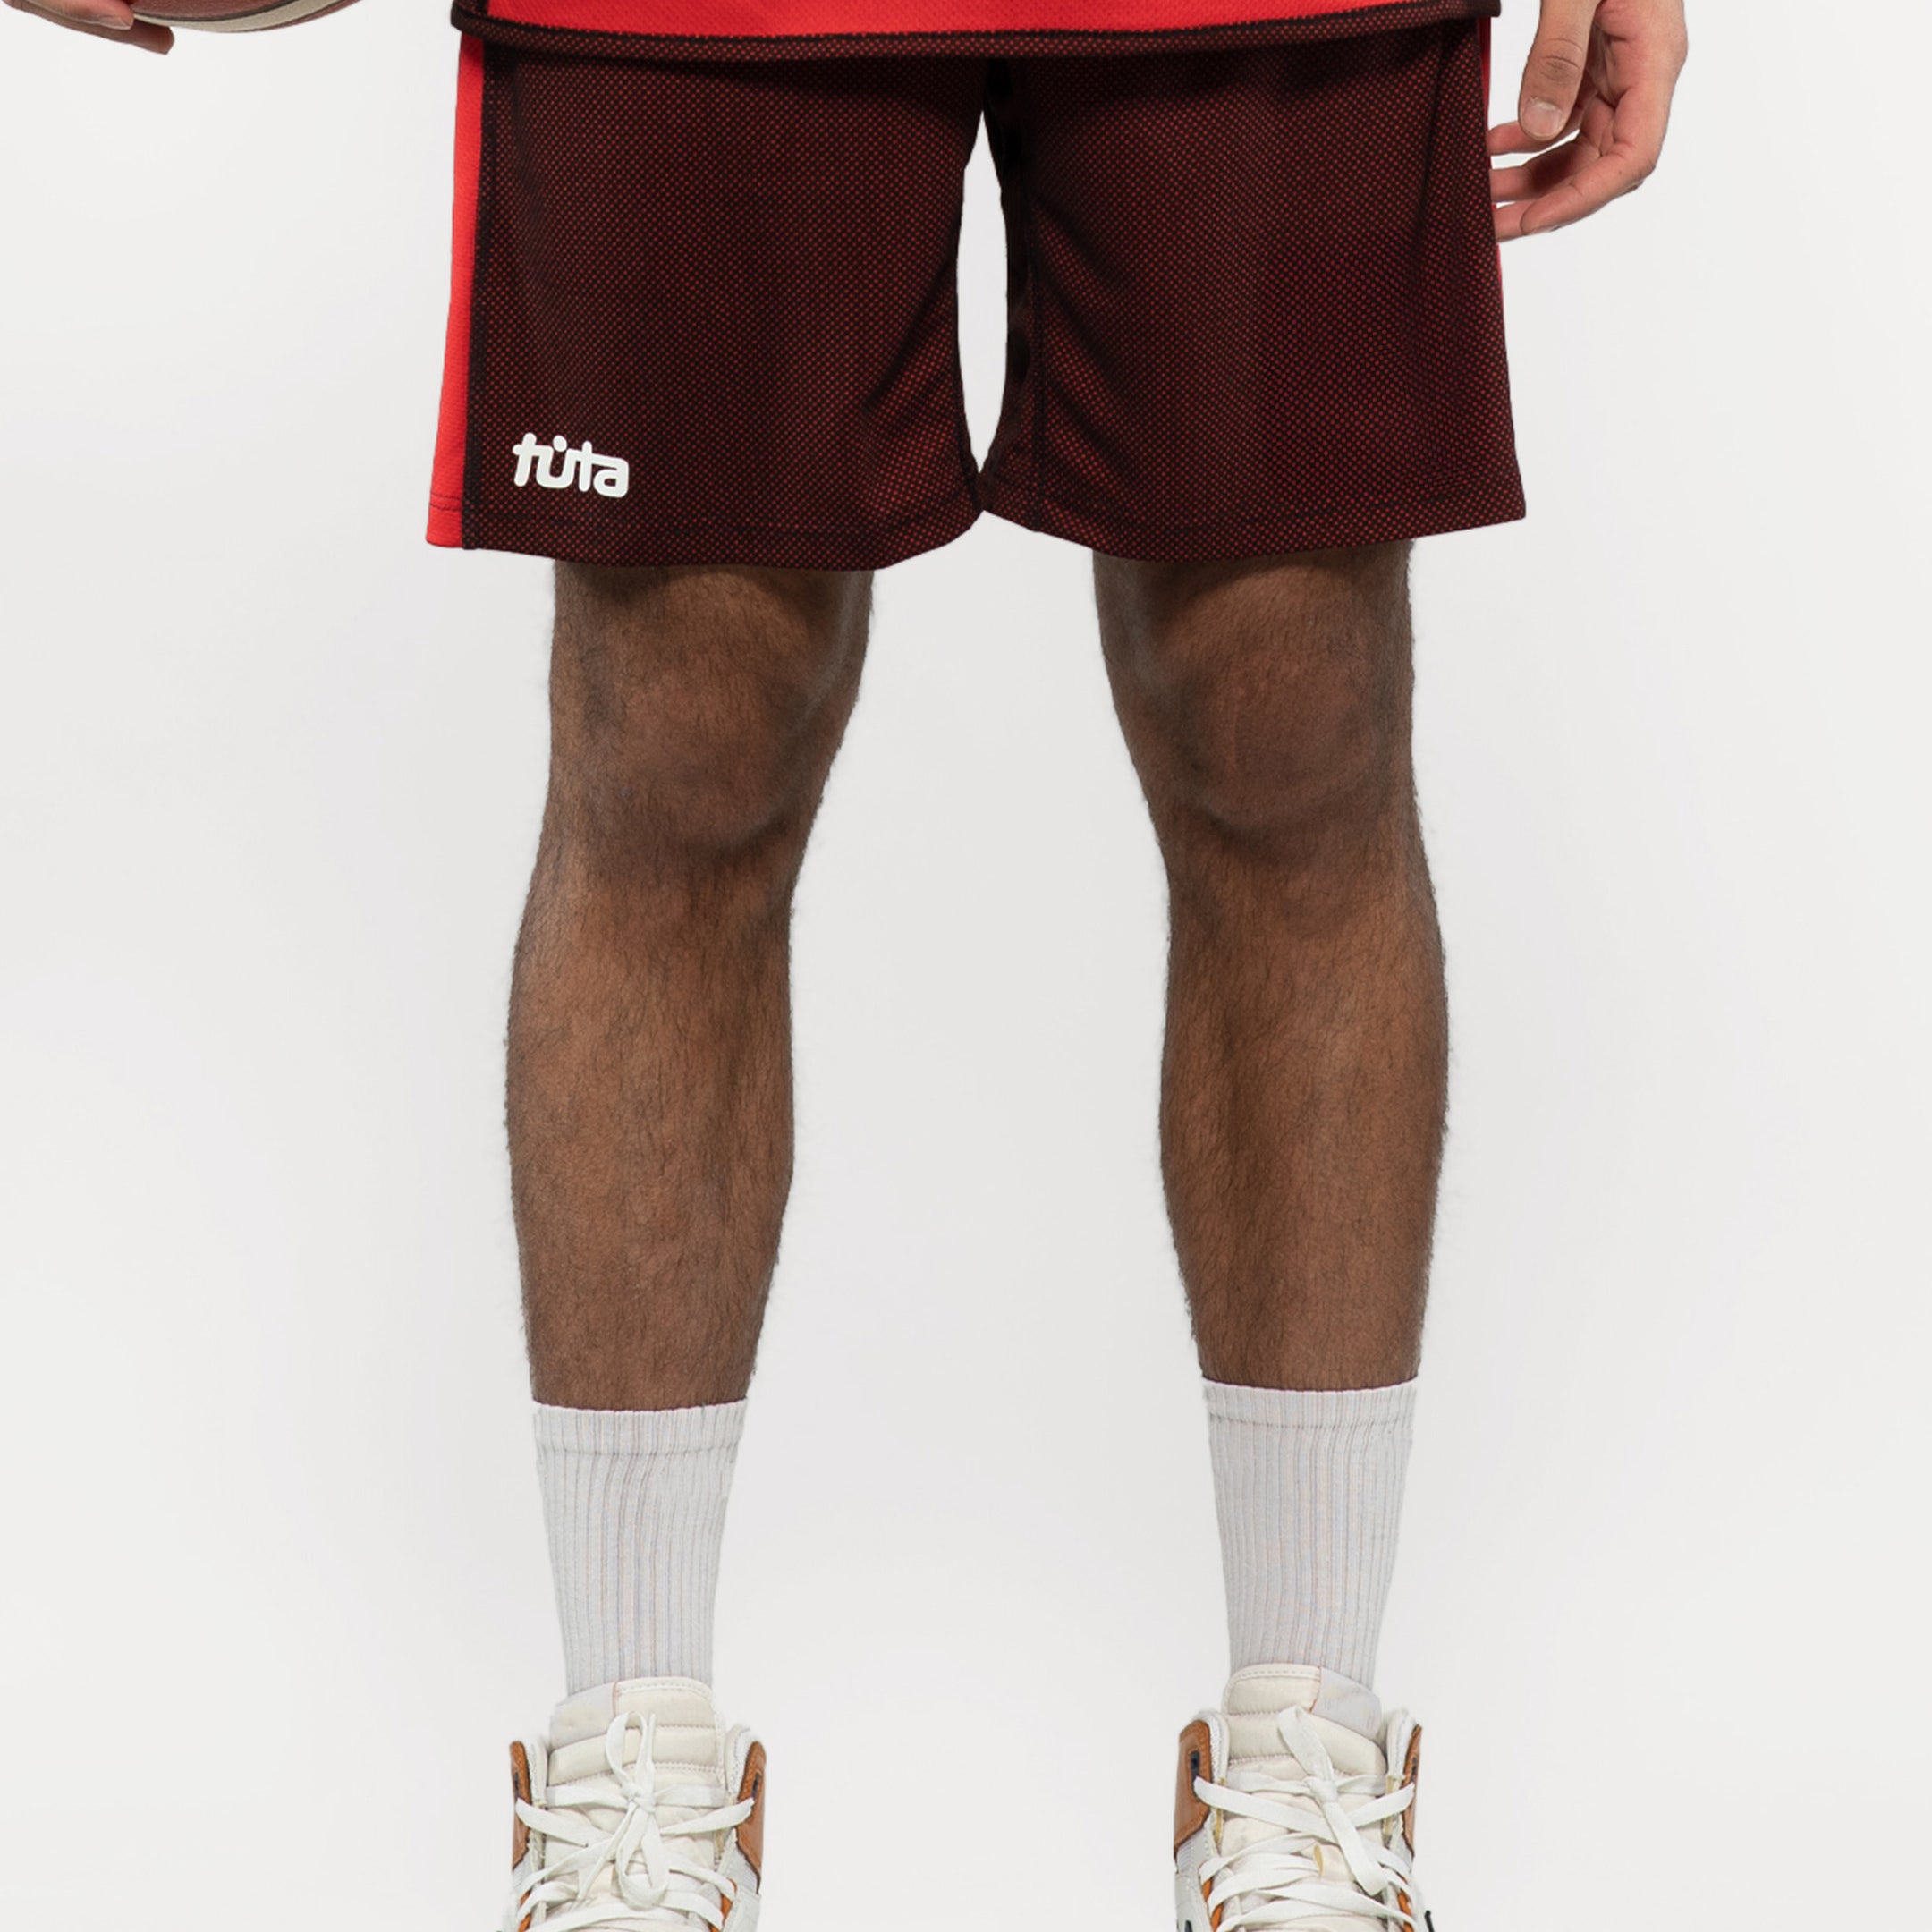 Double sided basketball shorts